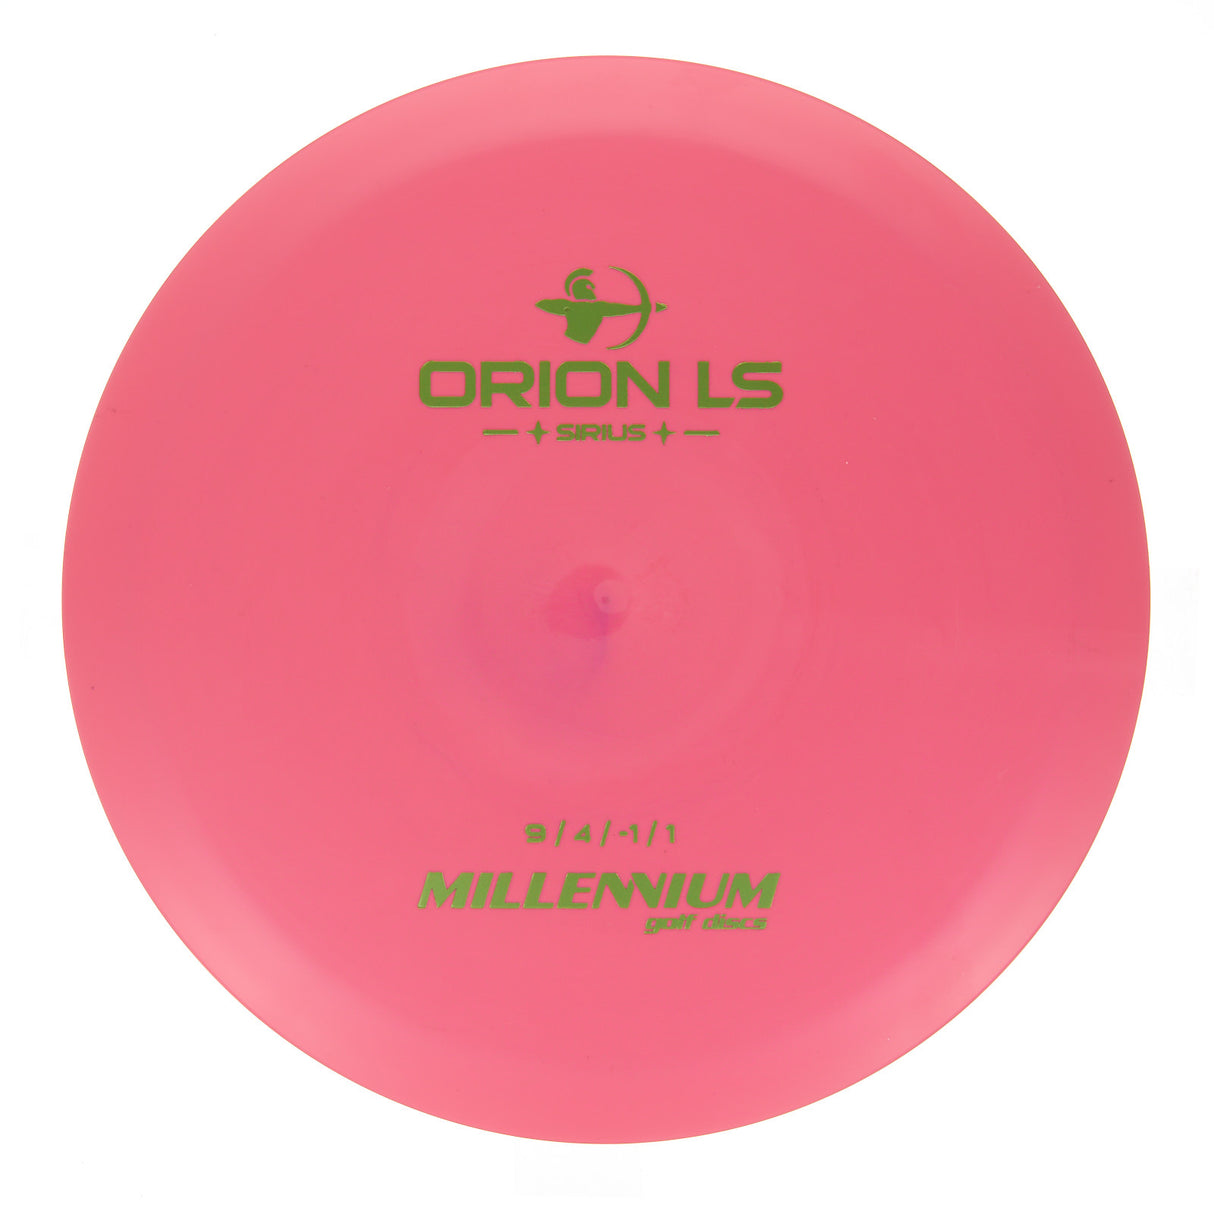 Millennium Orion LS - Sirius 174g | Style 0002